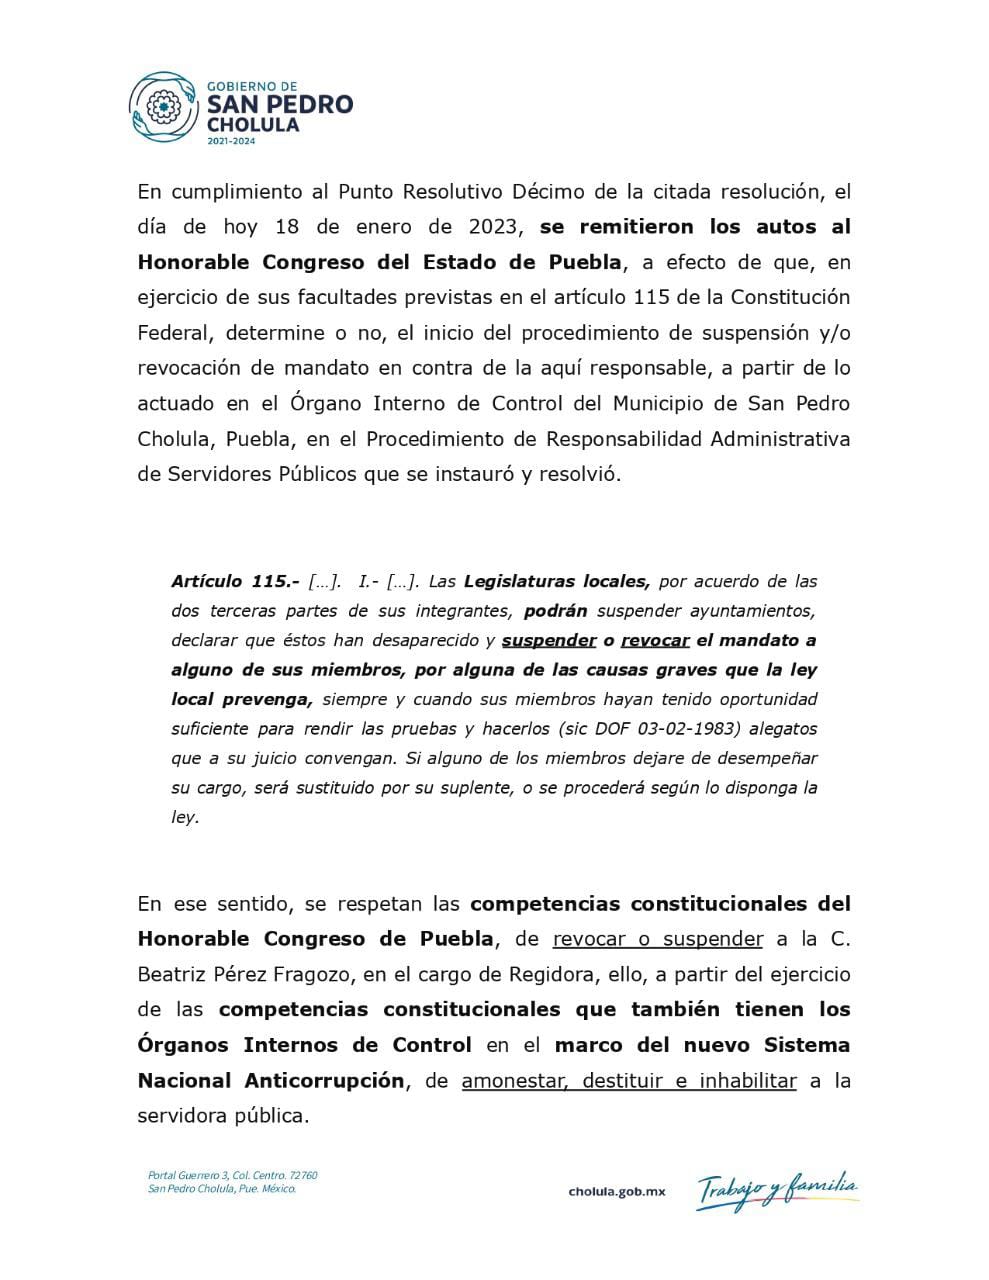 San Pedro Cholula remitió al Congreso local documentos para que determine suspensión o revocación de mandato de Beatriz Pérez como regidora